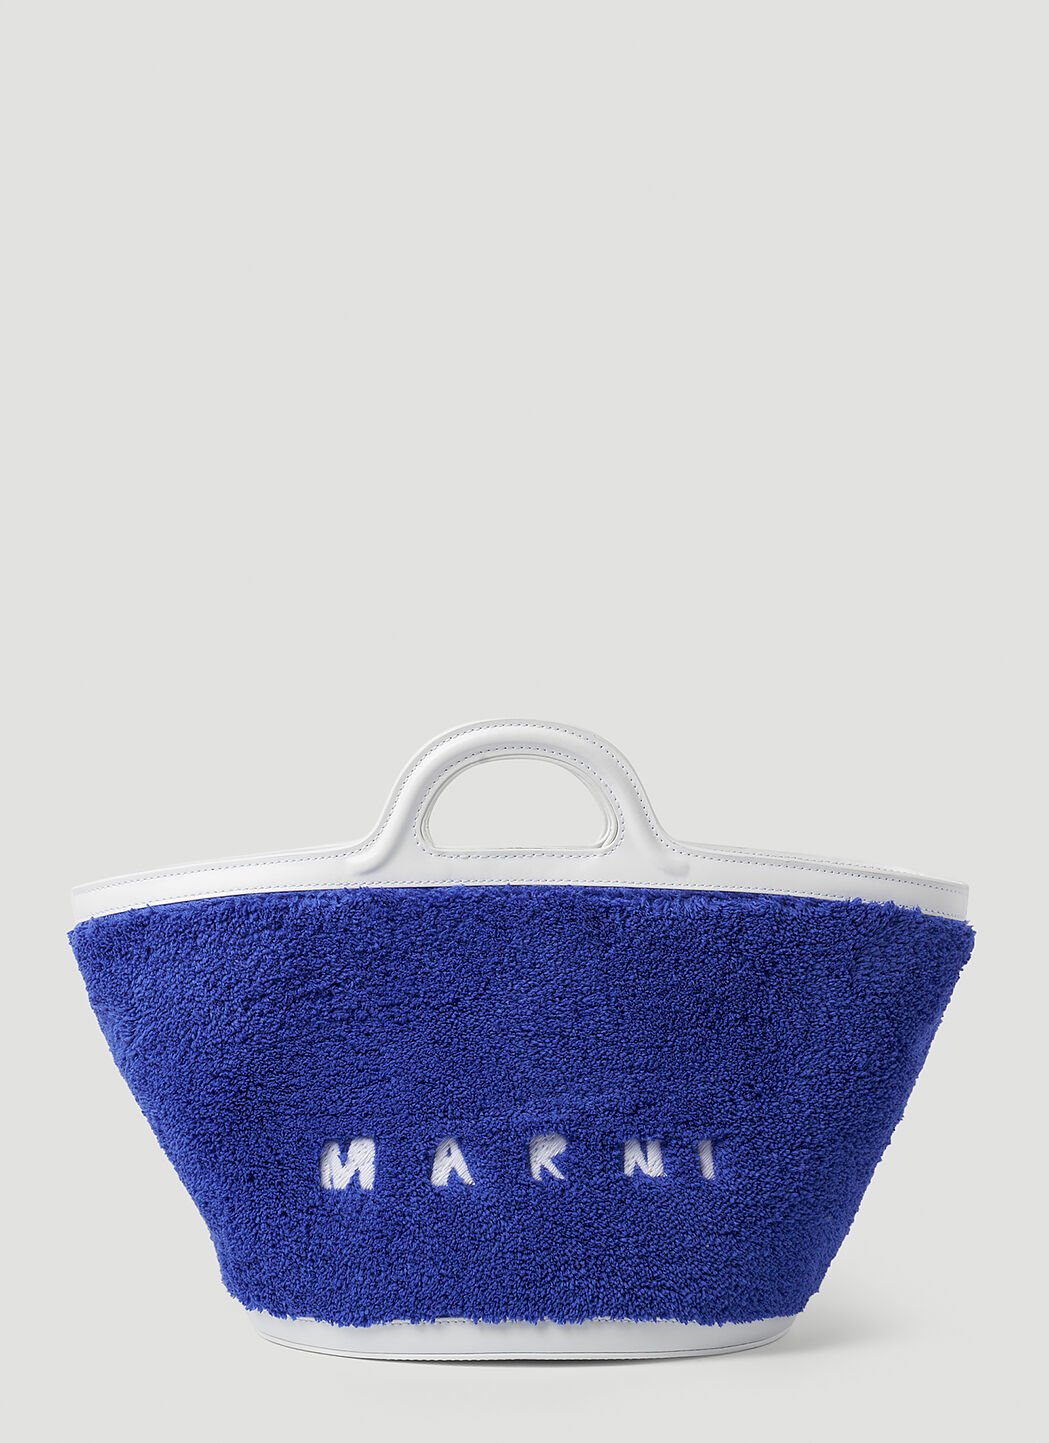 Marni Tropicalia スモール バケットトートバッグ ネイビー mni0151035